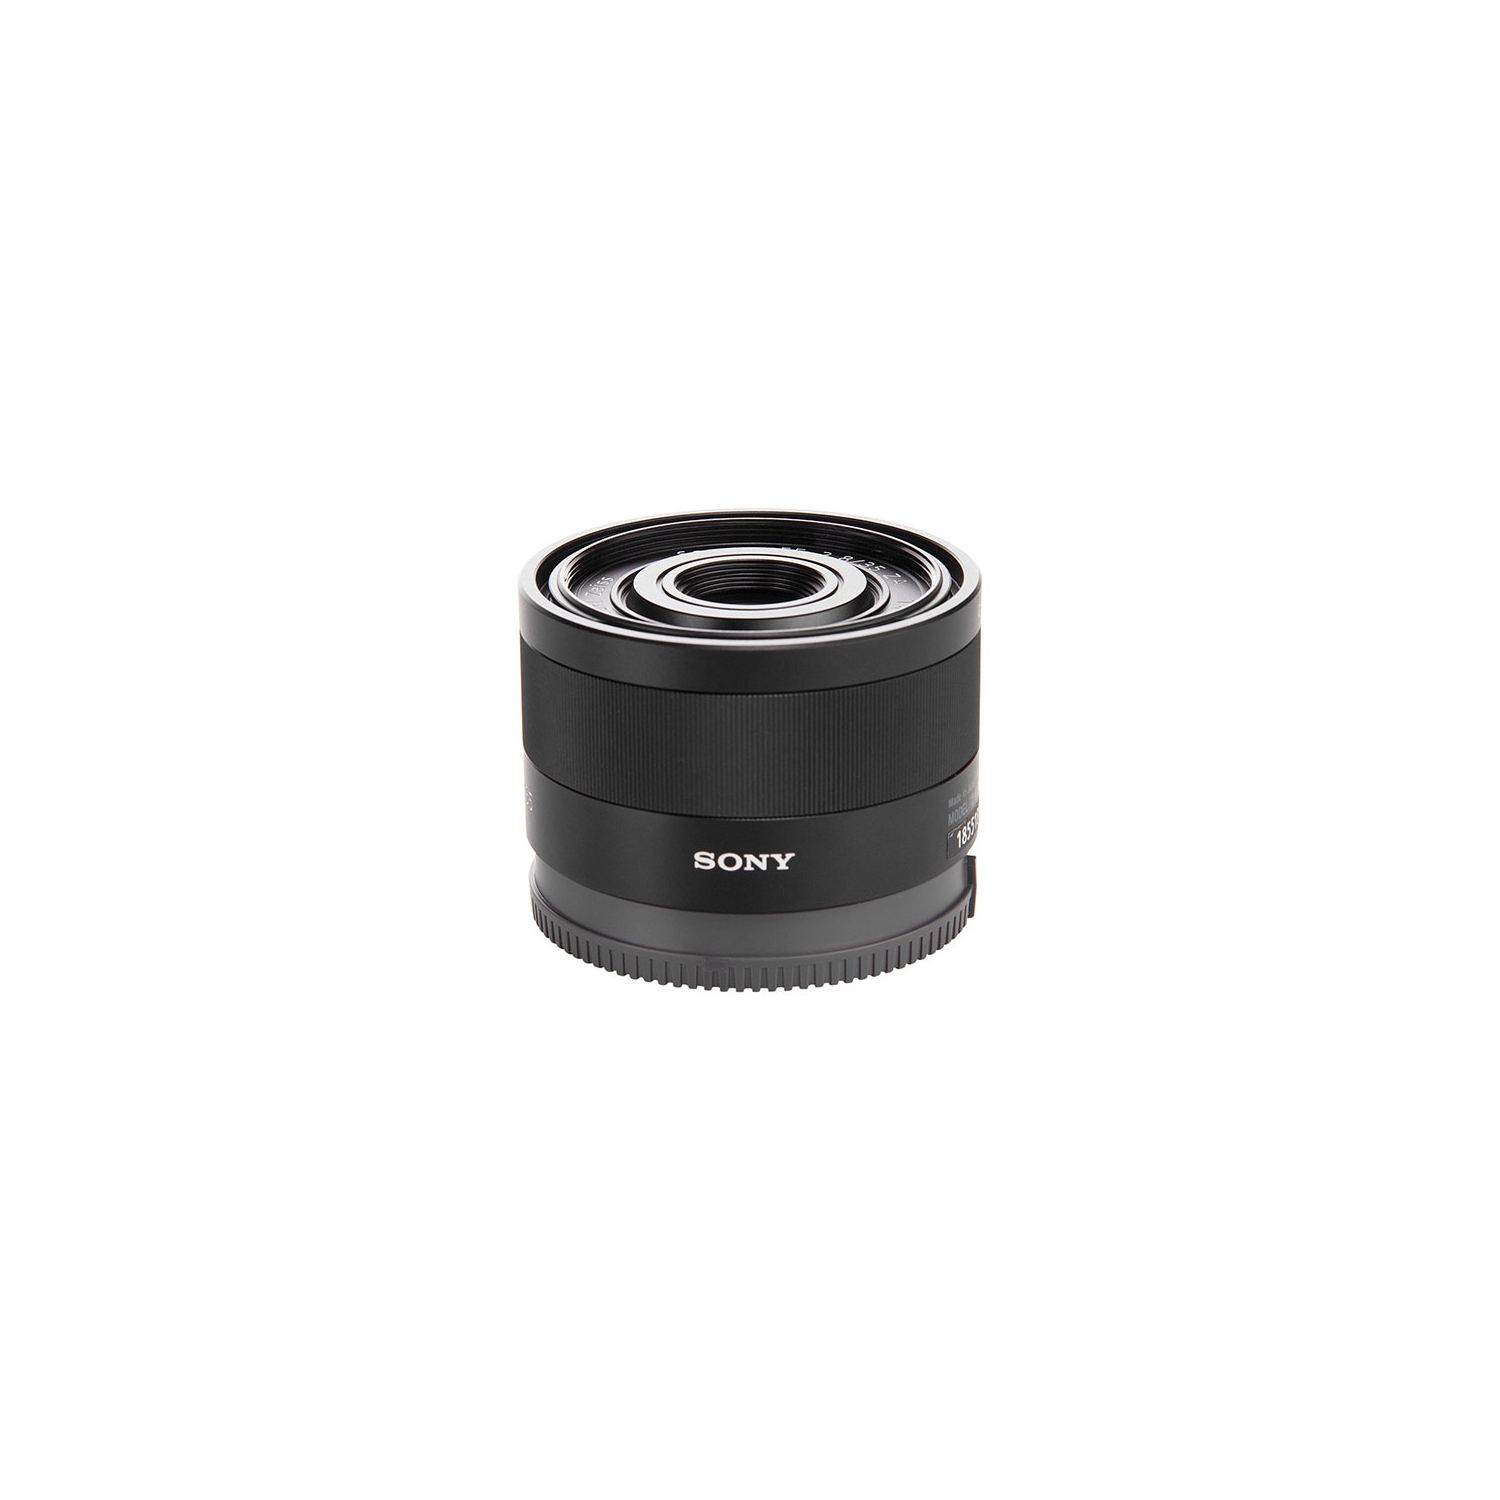 Refurbished (Fair) - Sony E-Mount Full-Frame FE Sonnar T 35mm f/2.8 ZEISS Wide Angle Prime Lens